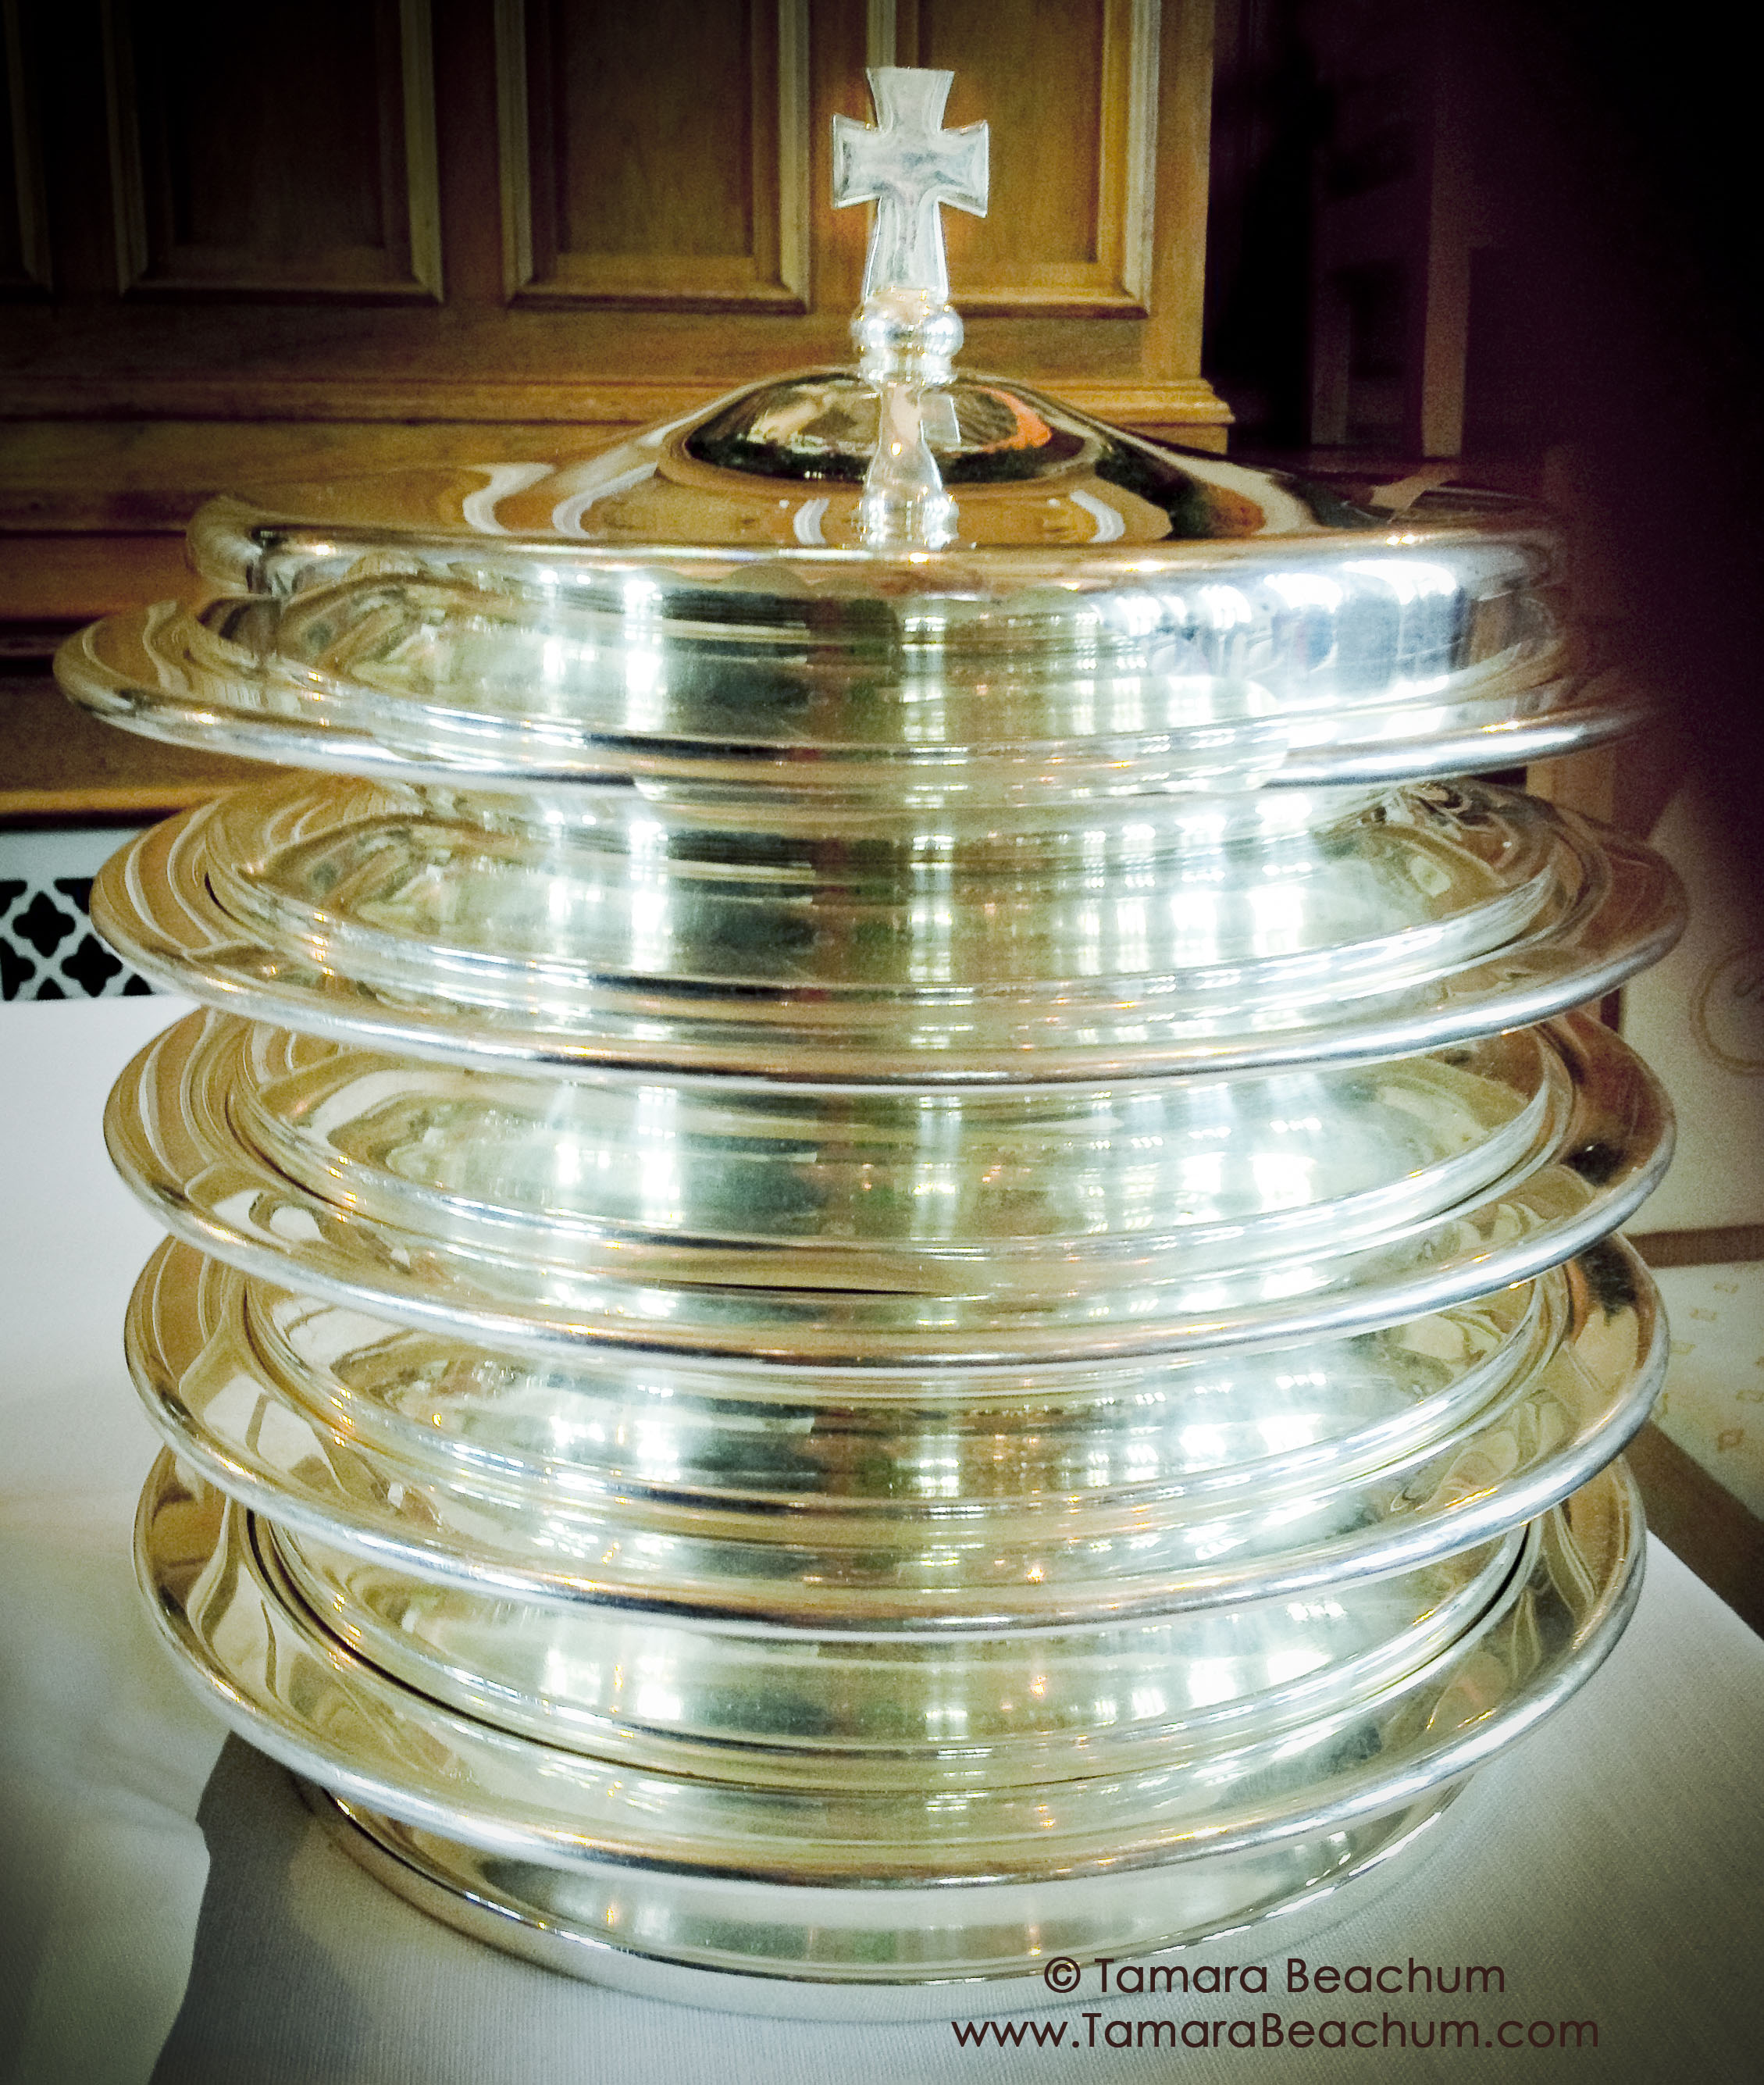 Silver communion plates